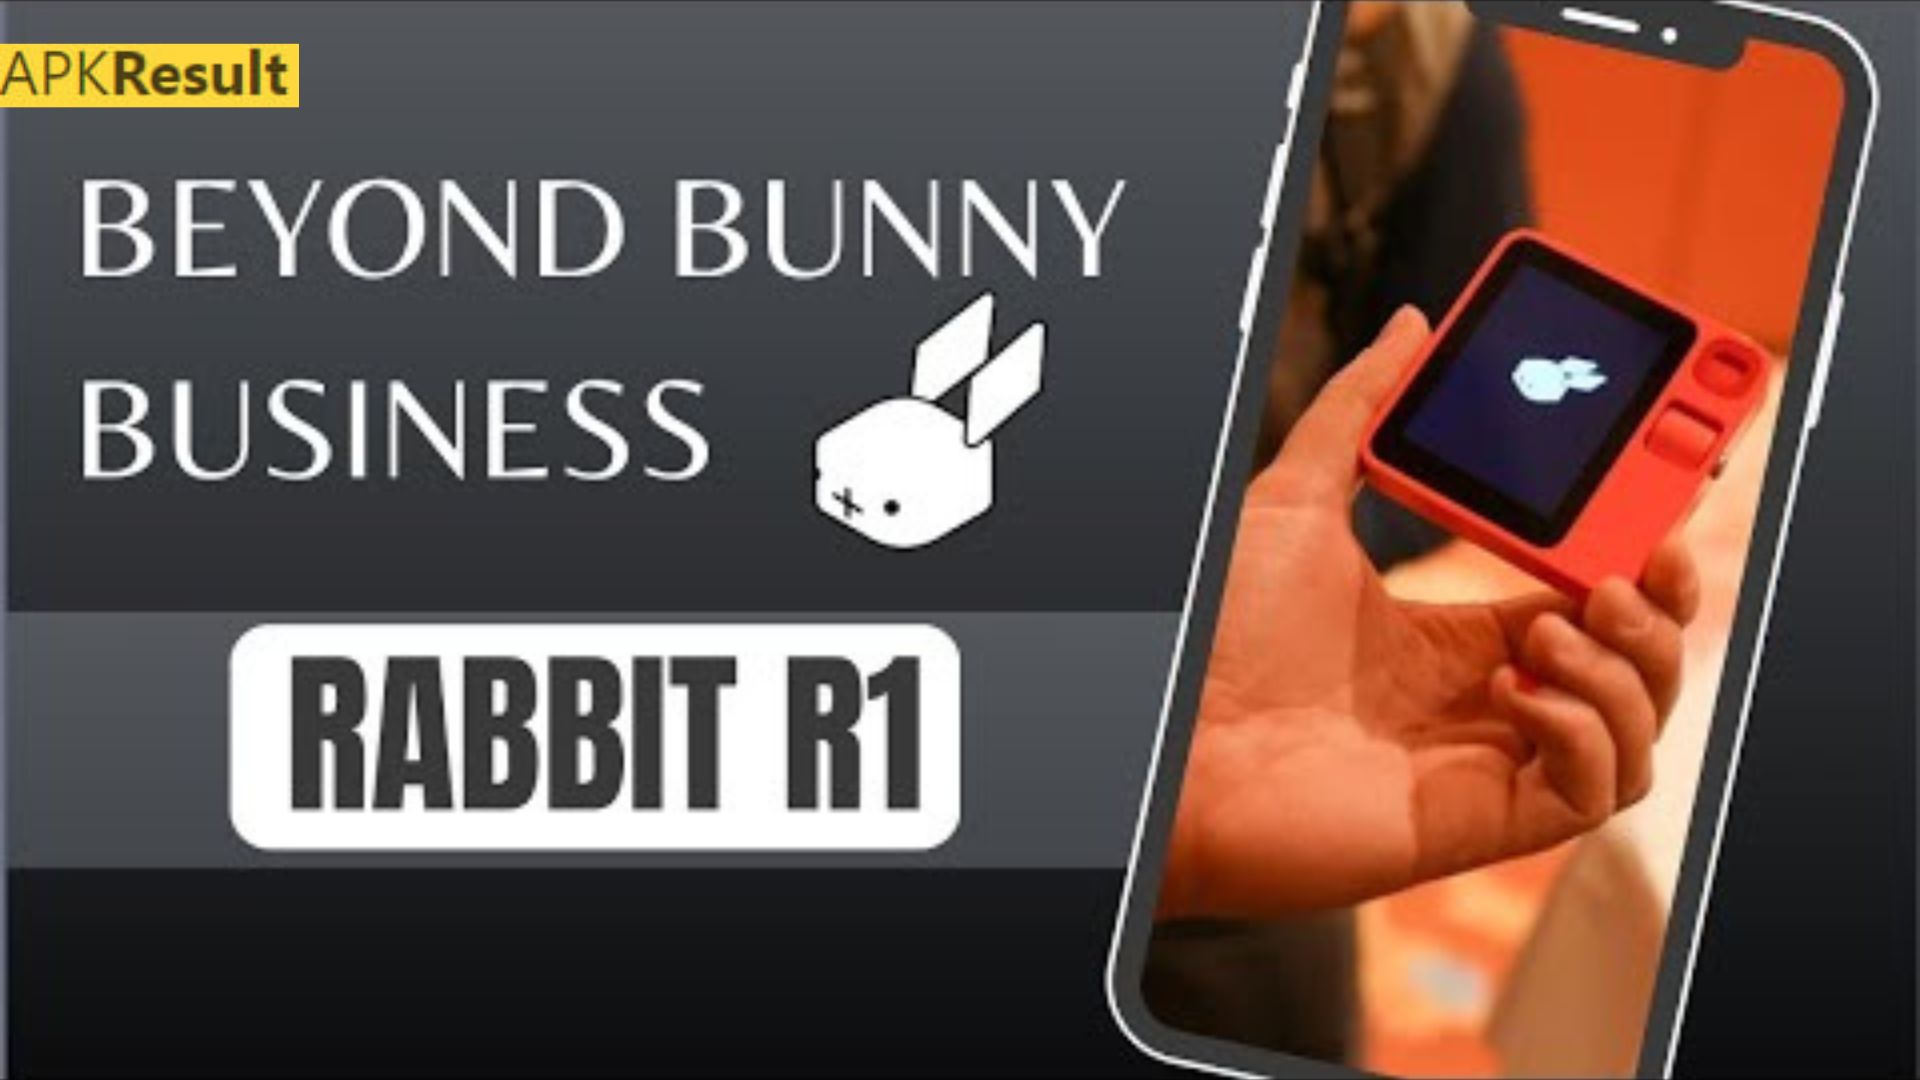 Rabbit R1 App